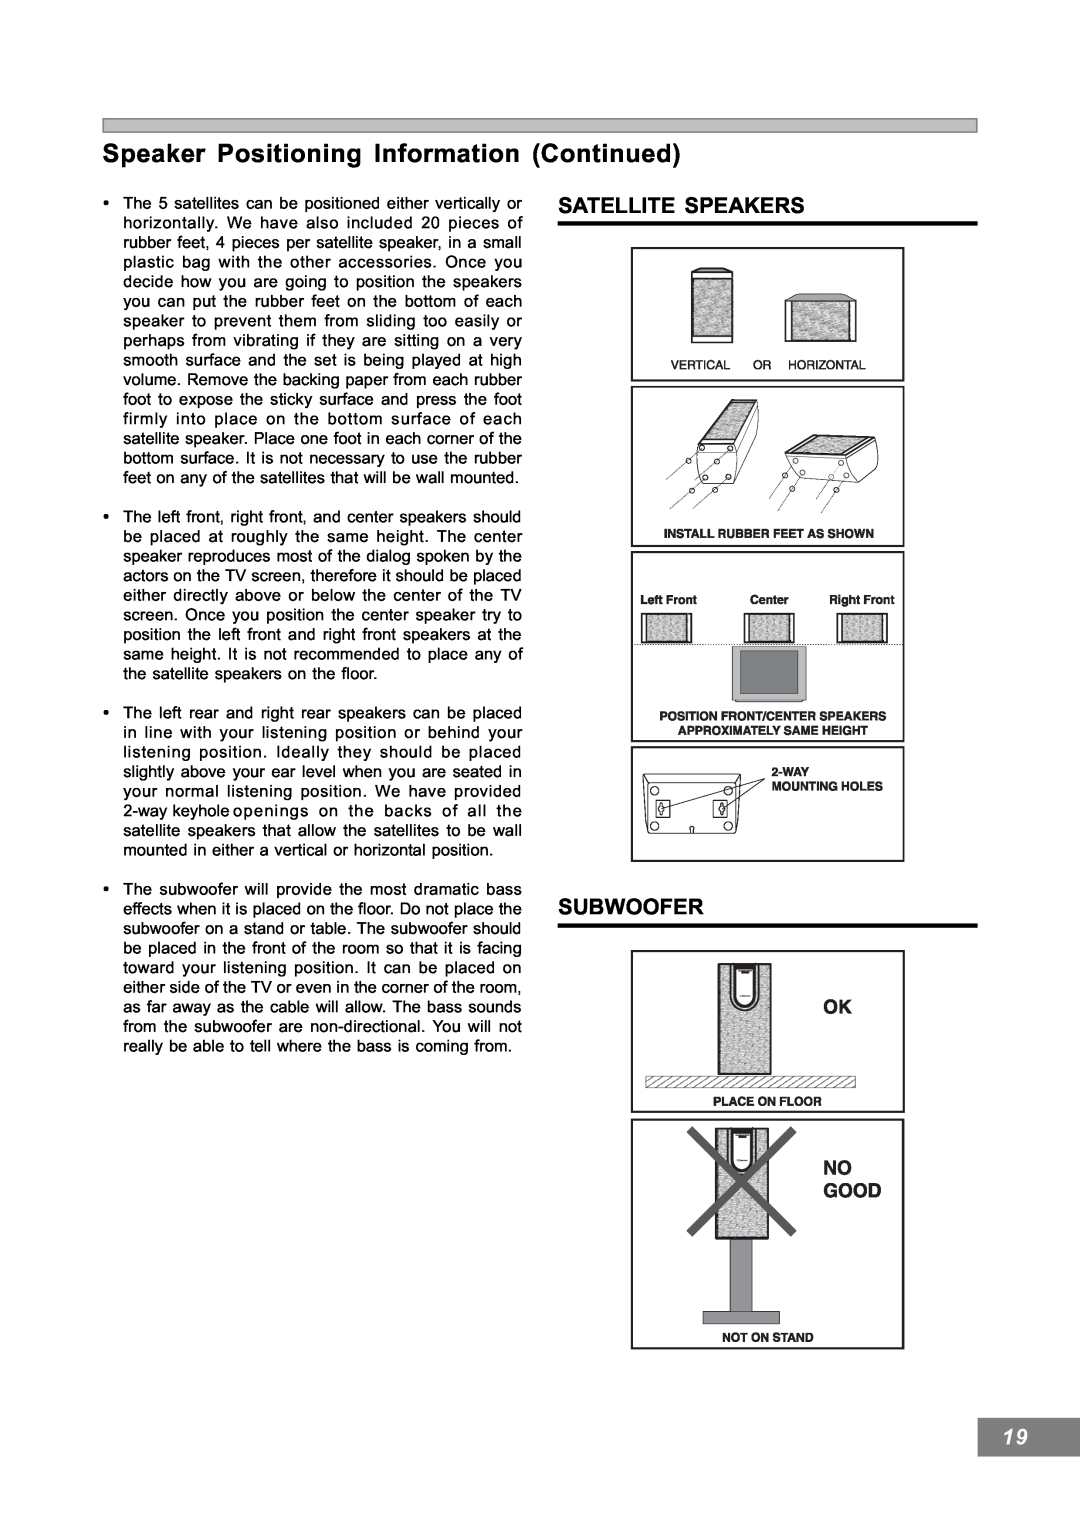 Emerson AV101 manual Speaker Positioning Information Continued, Satellite Speakers, Subwoofer 